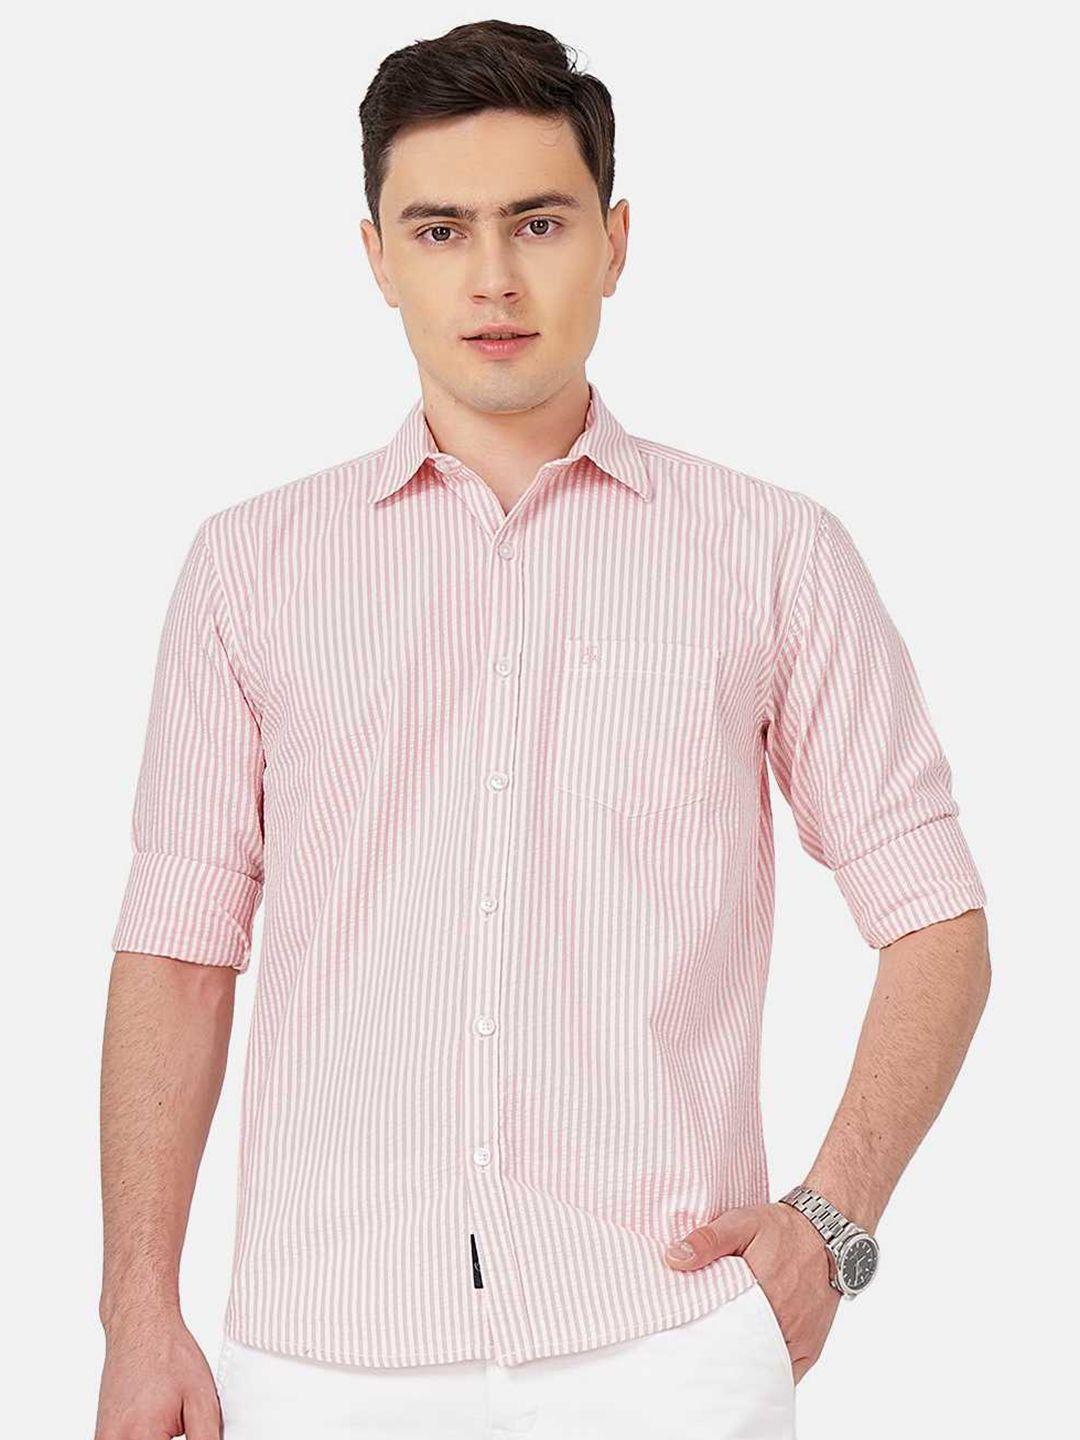 soratia-men-slim-fit-striped-casual-cotton-shirt